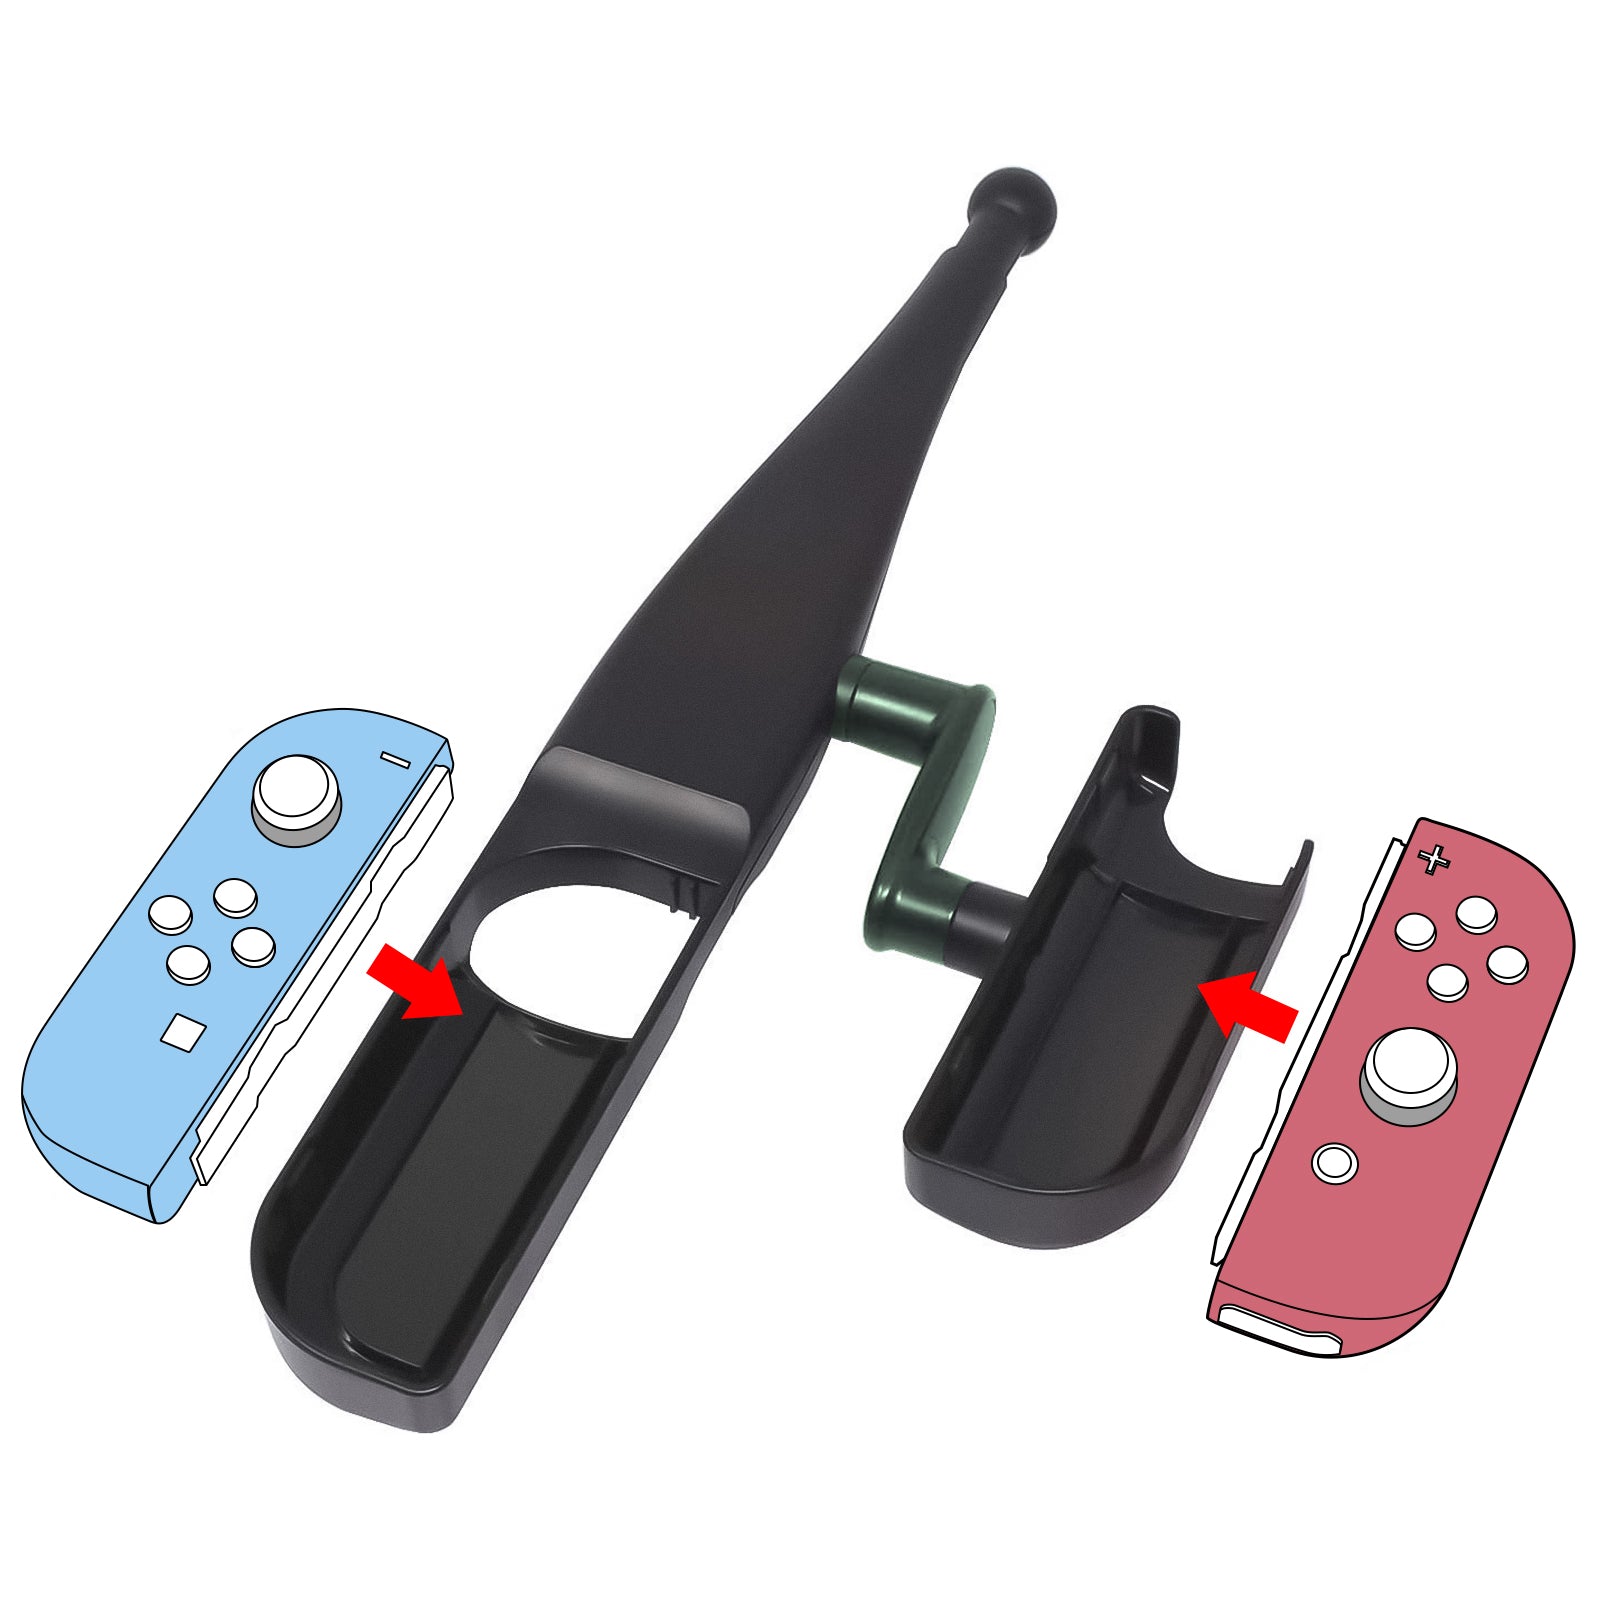 DOBE Fishing Rod for Nintendo Switch/Switch OLED Joy-Con